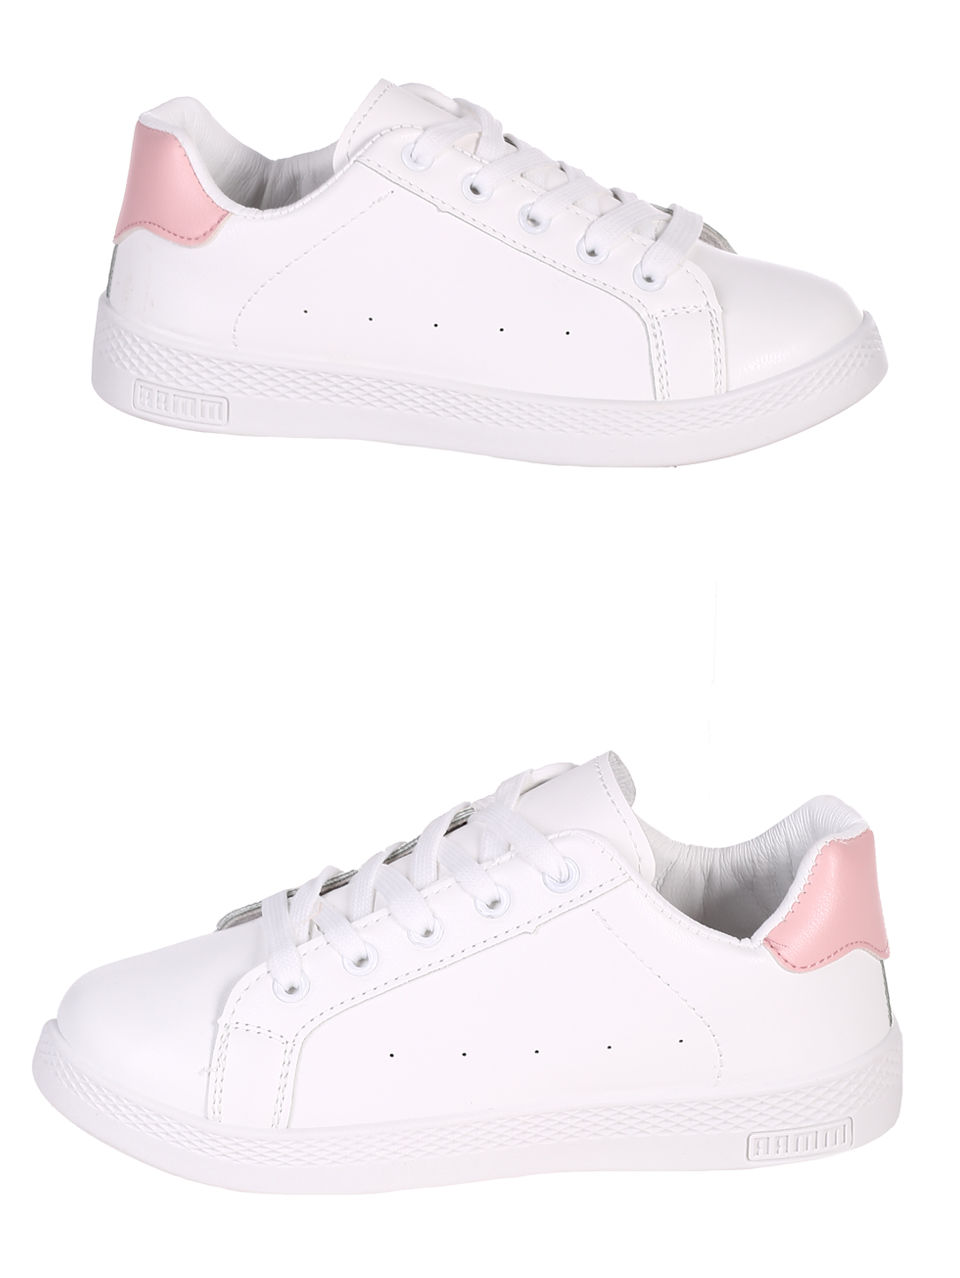  3U-23046 white/pink